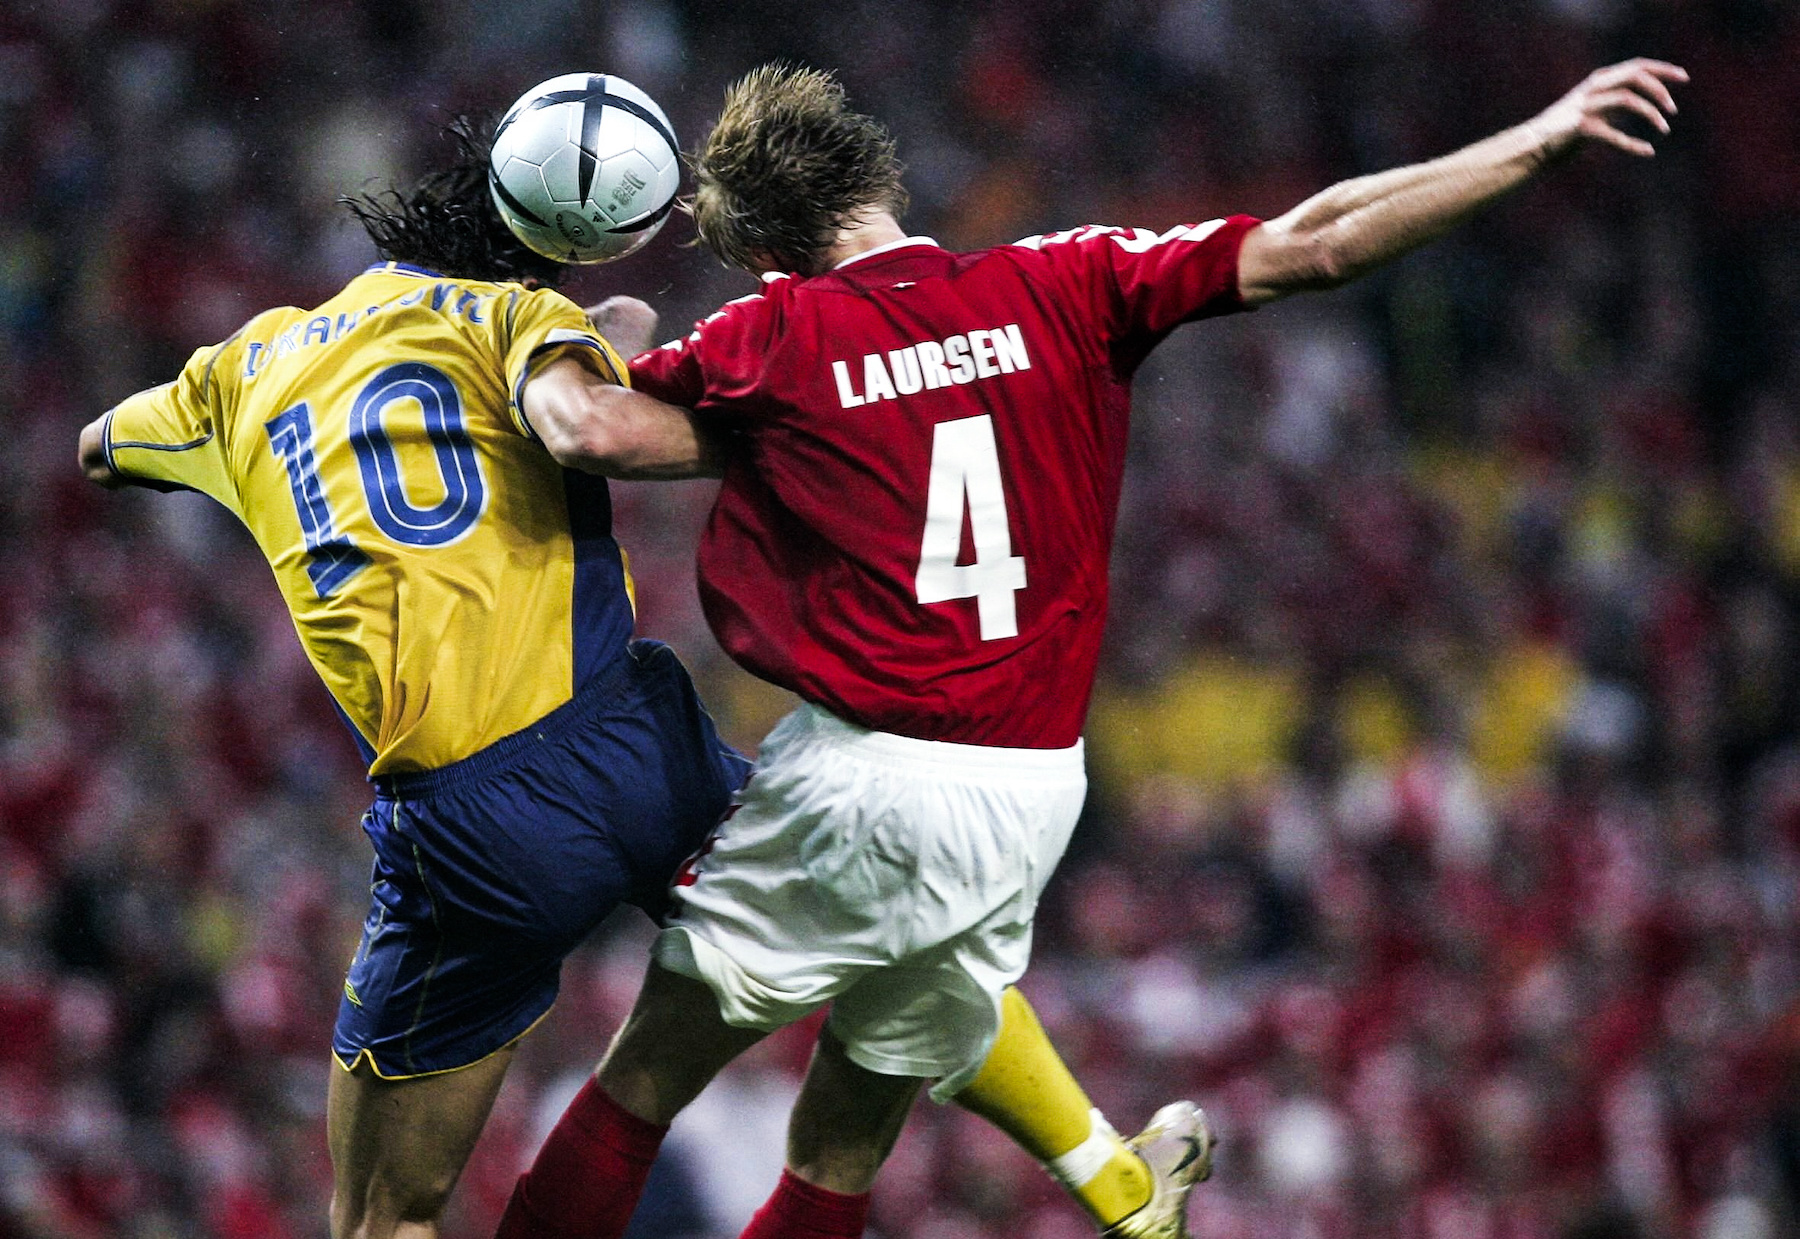 PORTO, PORTUGAL - JUNE 22:    Fussball: Euro 2004 in Portugal, Vorrunde / Gruppe C / Spiel 22, Porto; Daenemark - Schweden ( DEN - SWE ); Zlatan IBRAHIMOVIC / SWE, Martin LAURSEN / DEN 22.06.04.  (Photo by Sandra Behne/Bongarts/Getty Images)